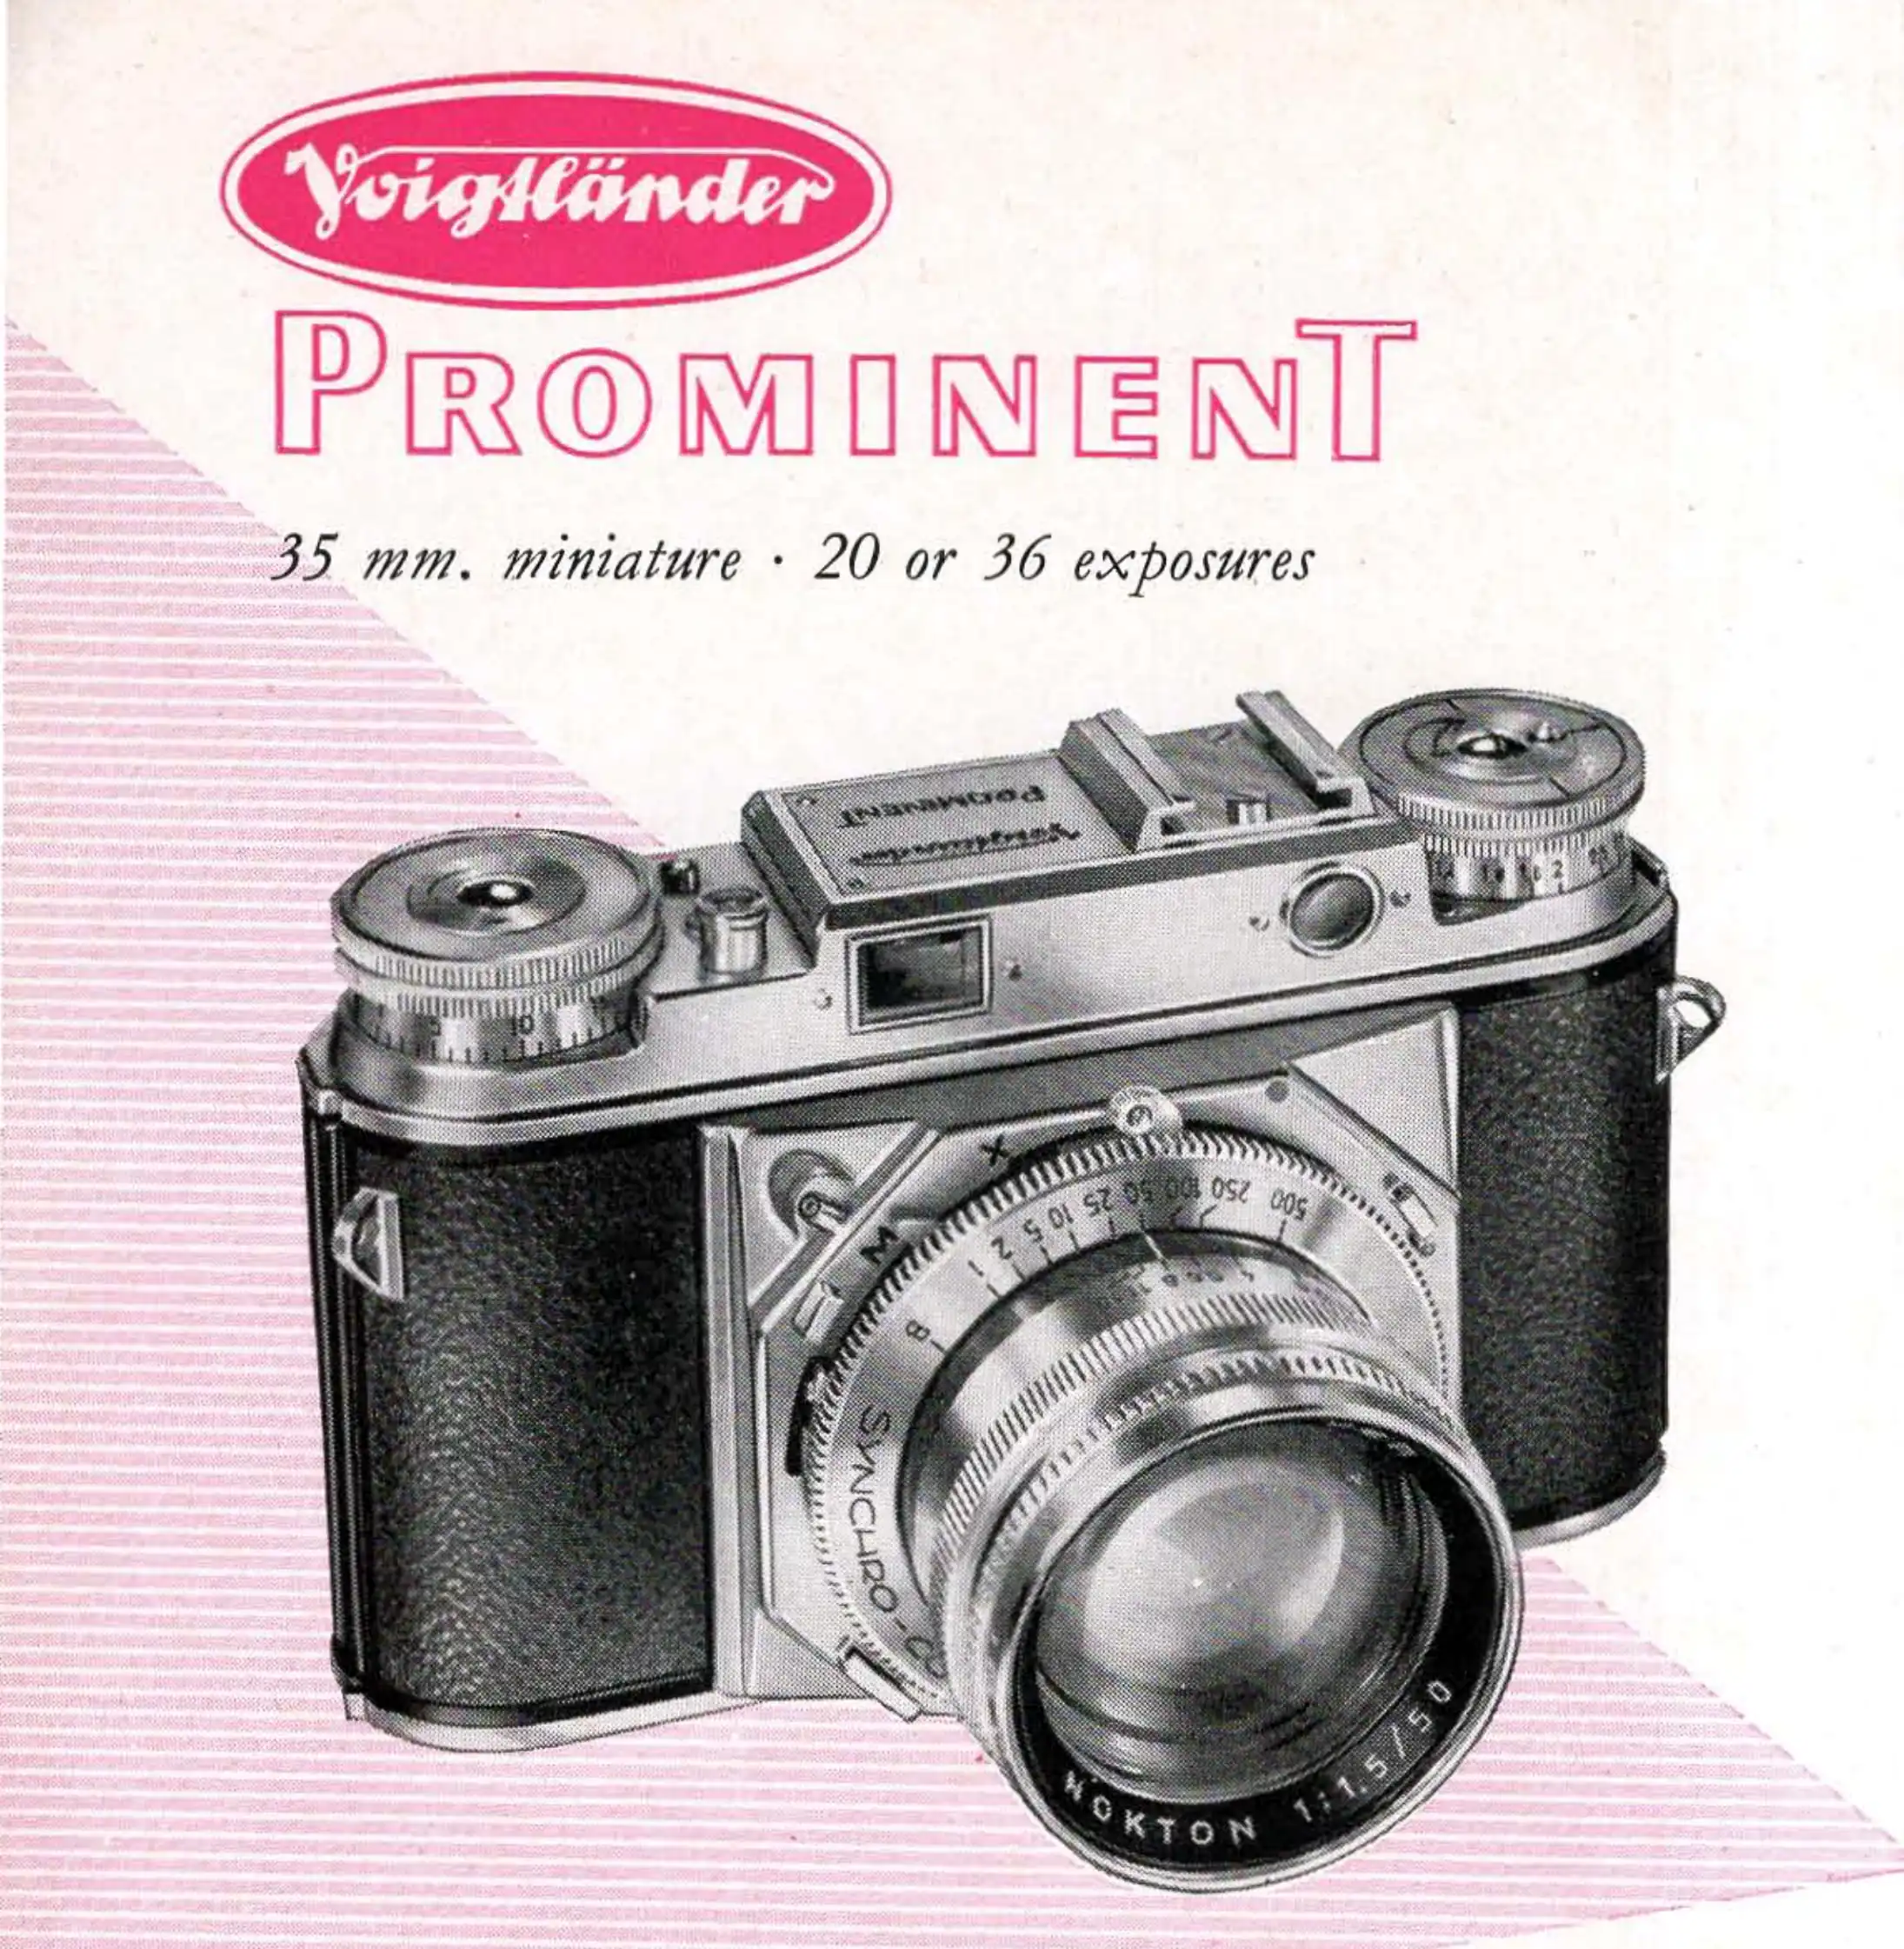 A brochure of Voigtländer ProminenT camera along with the Nokton 50mm f1.5 lens